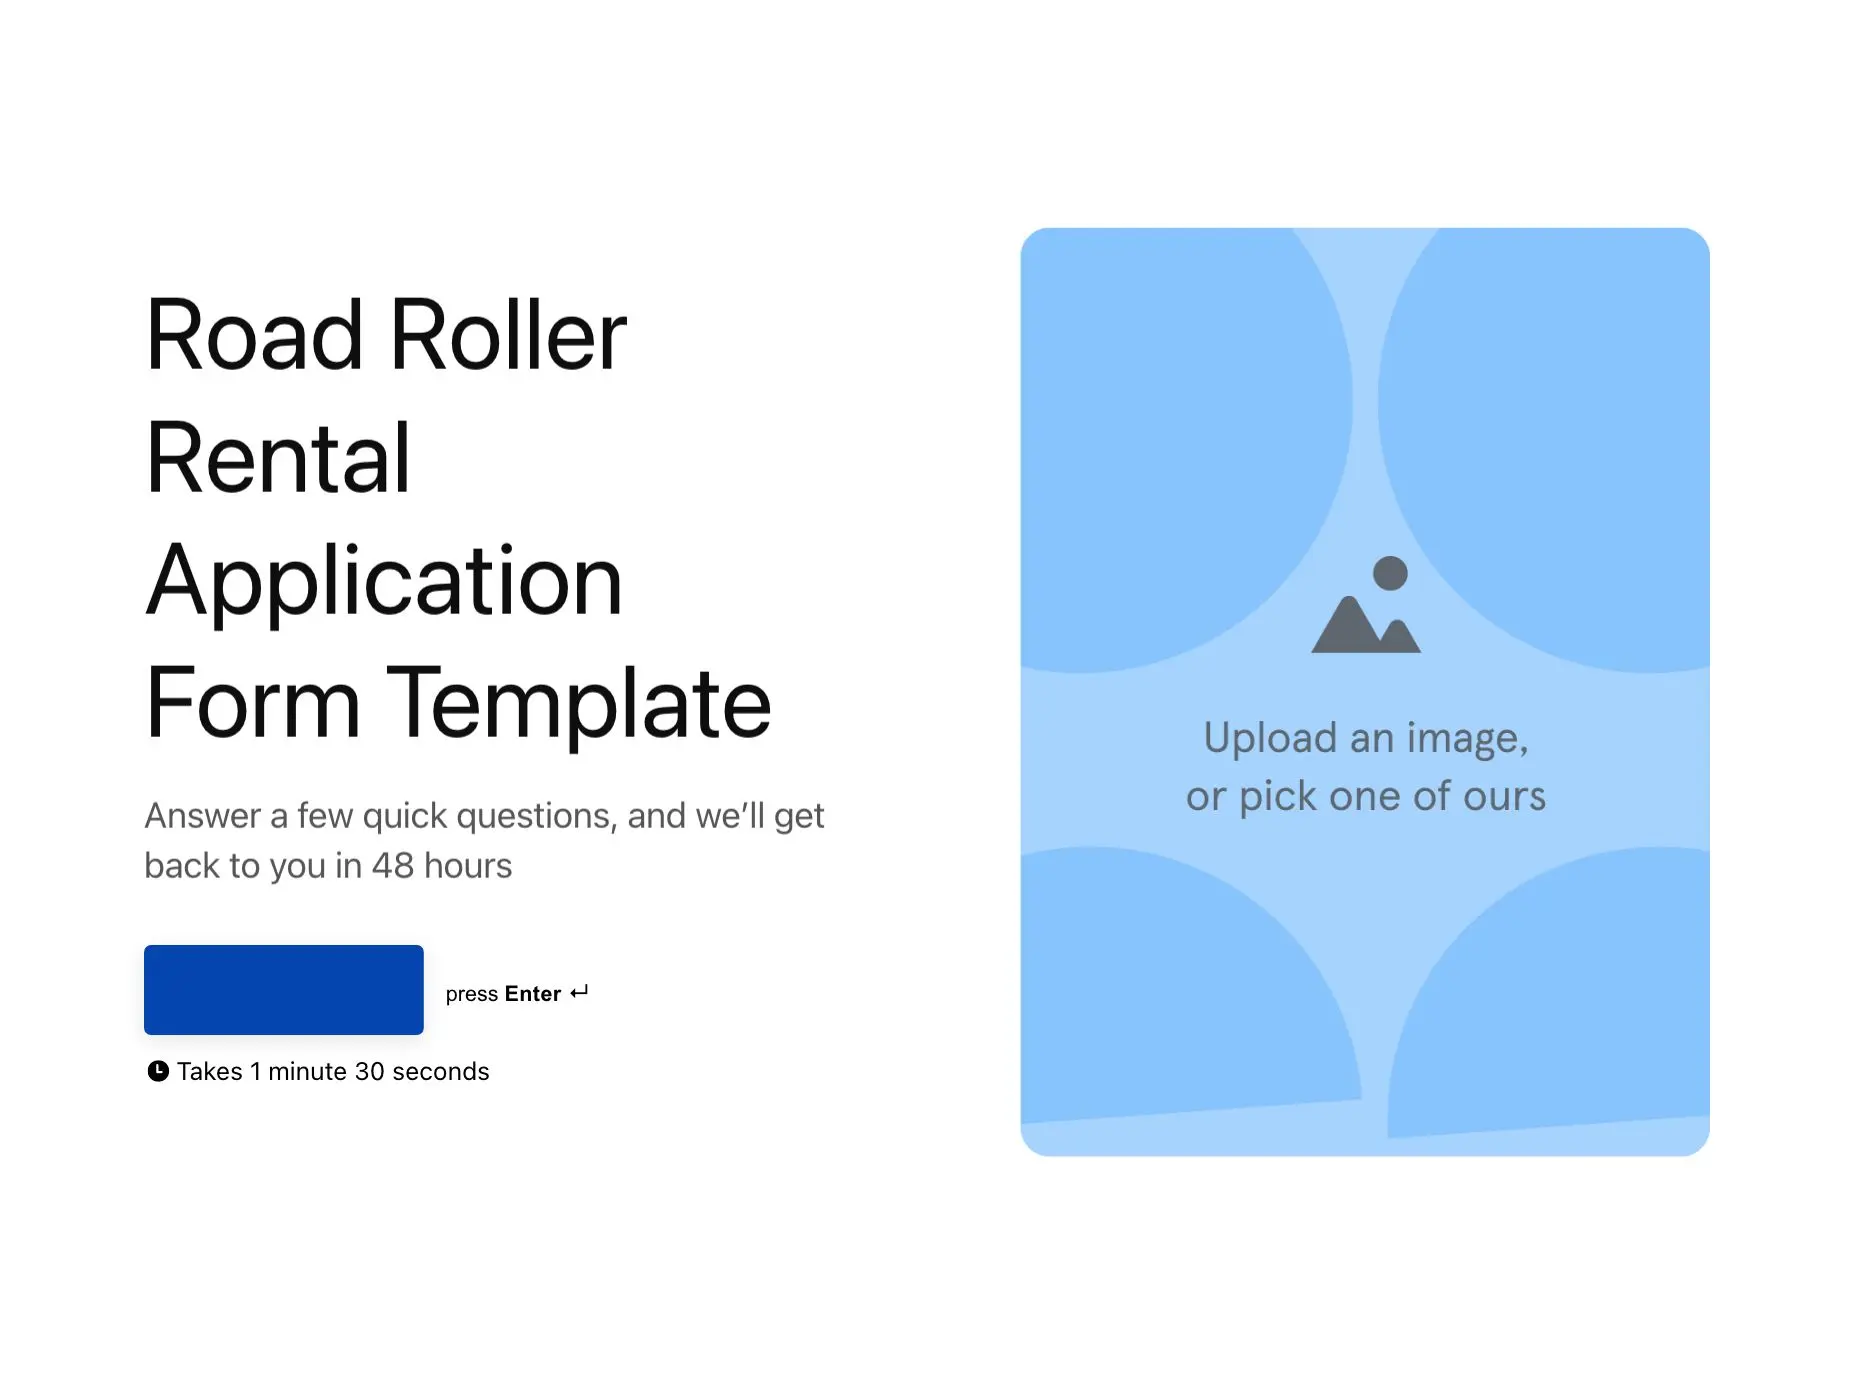 Road Roller Rental Application Form Template Hero